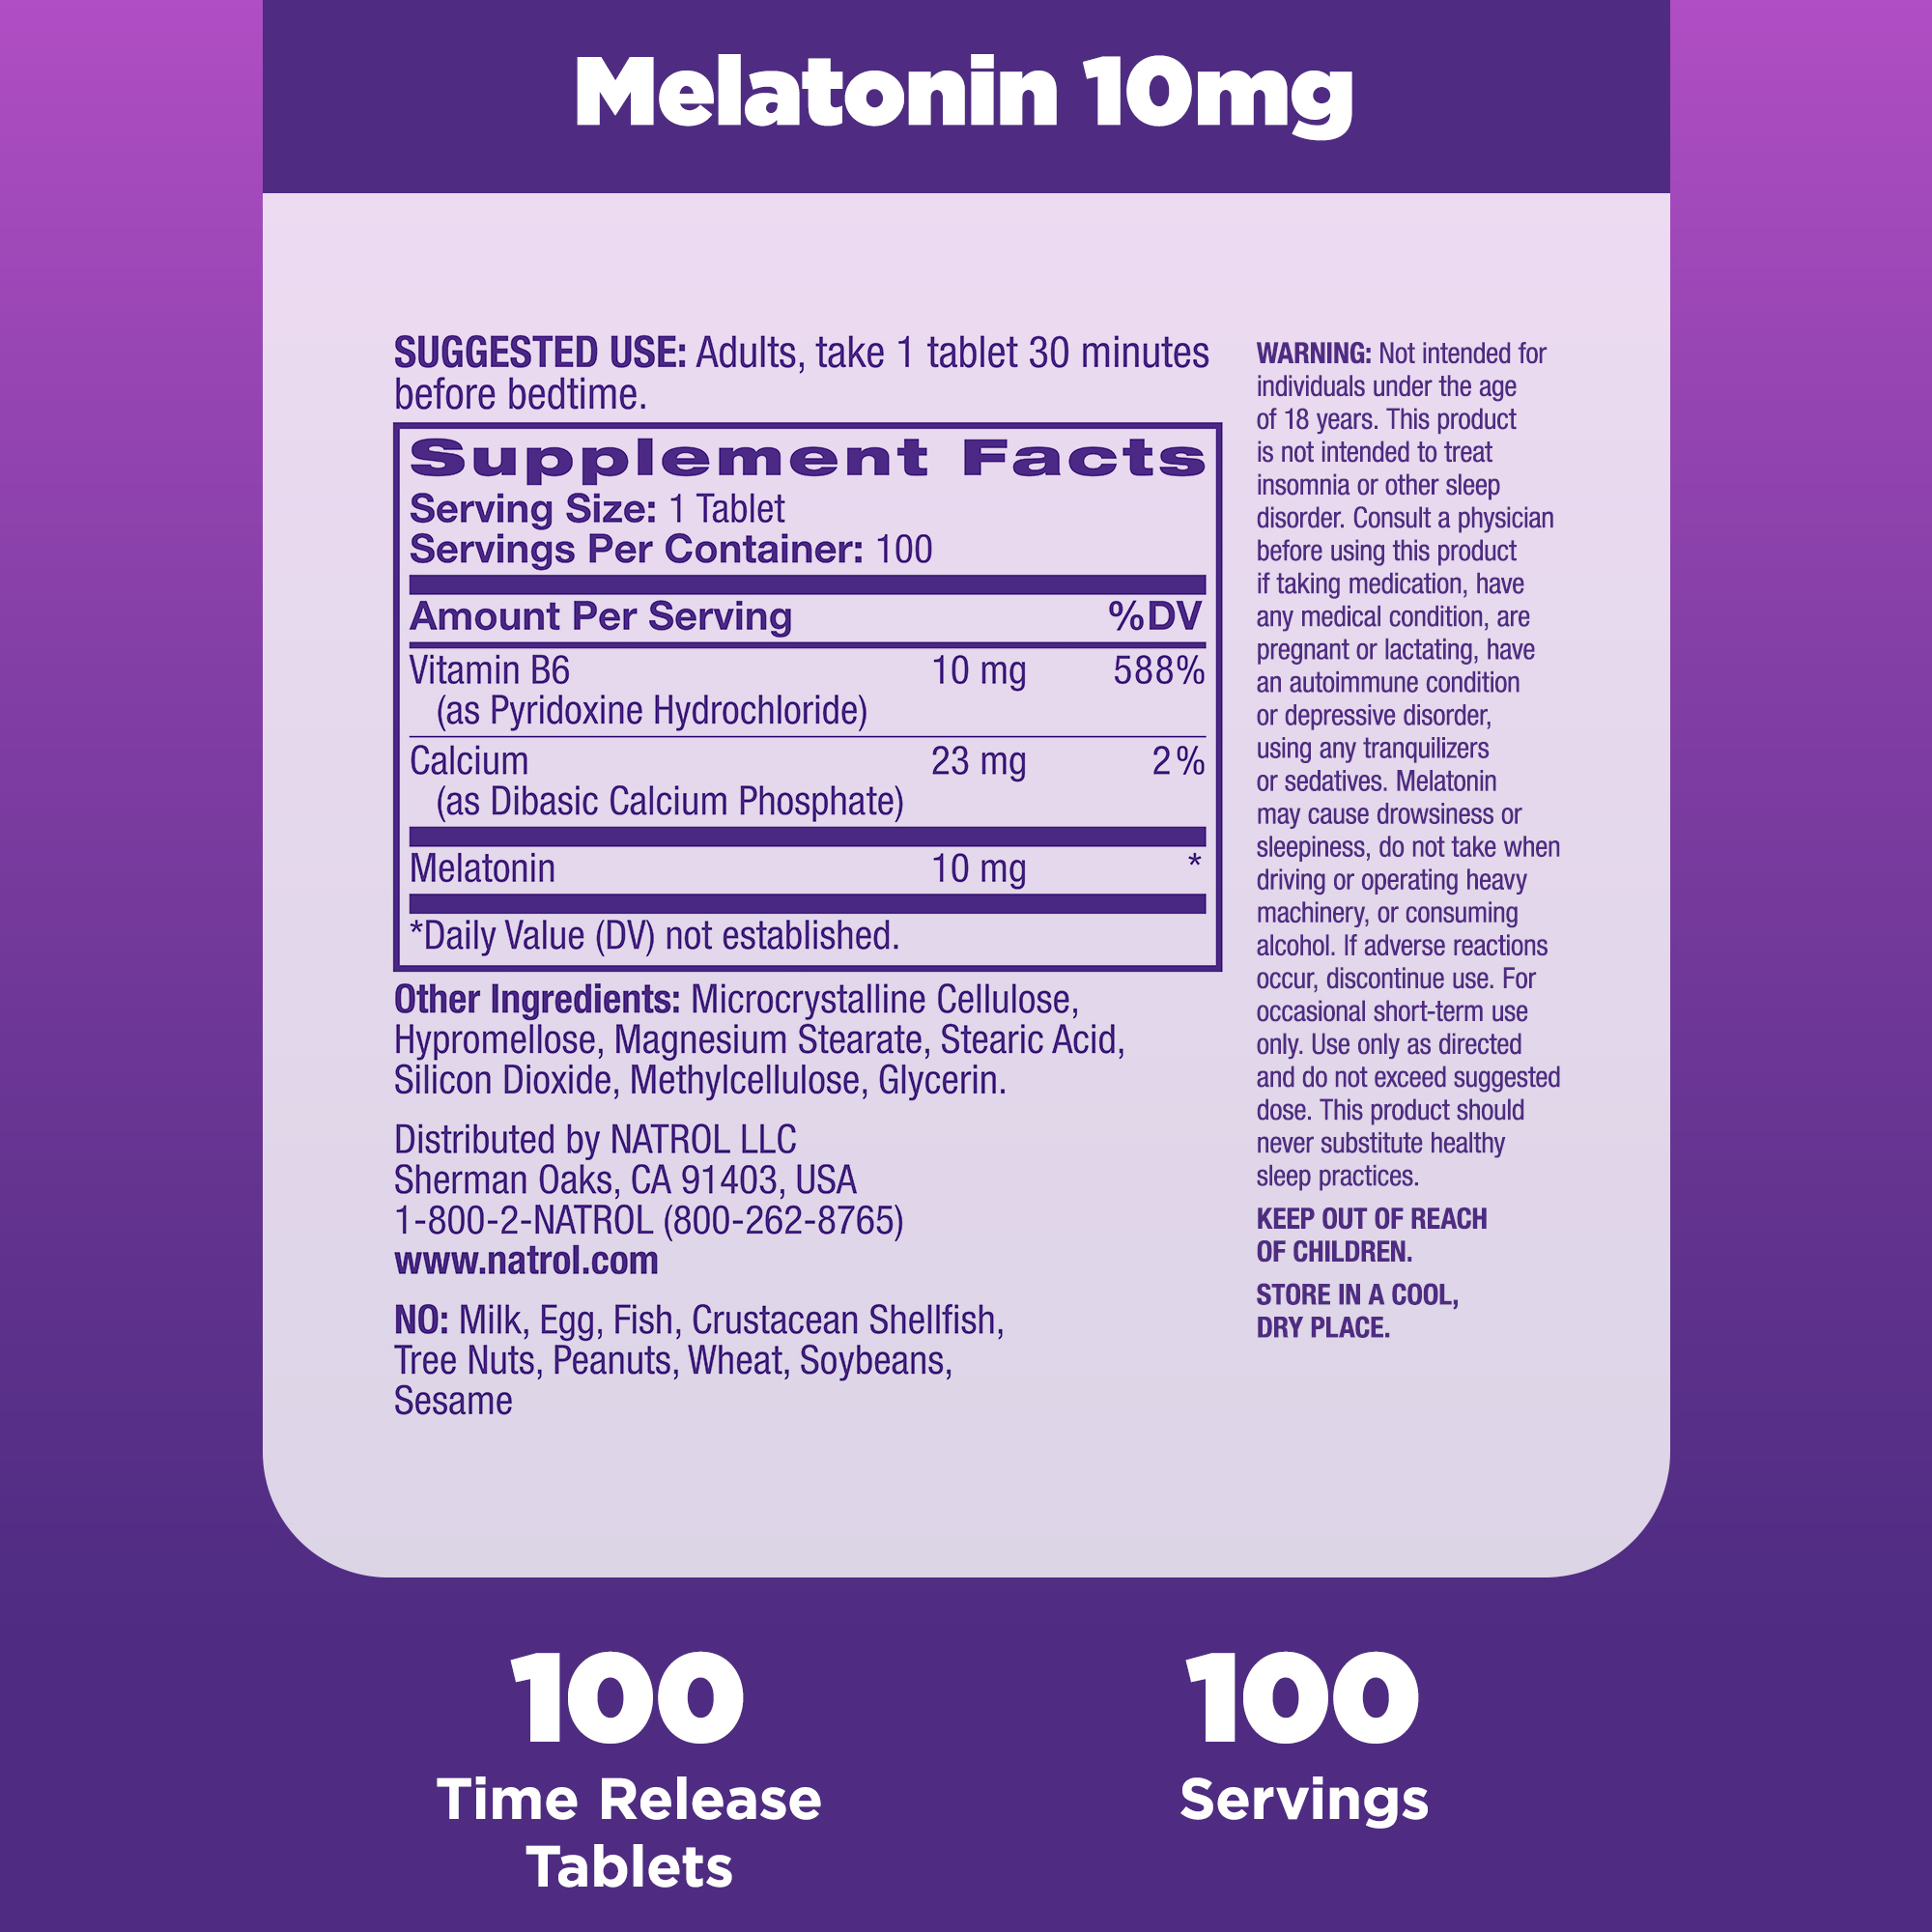 Natrol® Advanced Sleep Melatonin 10mg, Dietary Supplement for Restful Sleep, Time Release Melatonin Tablets, 100 Time-Release Tablets, 100 Day Supply - image 4 of 8